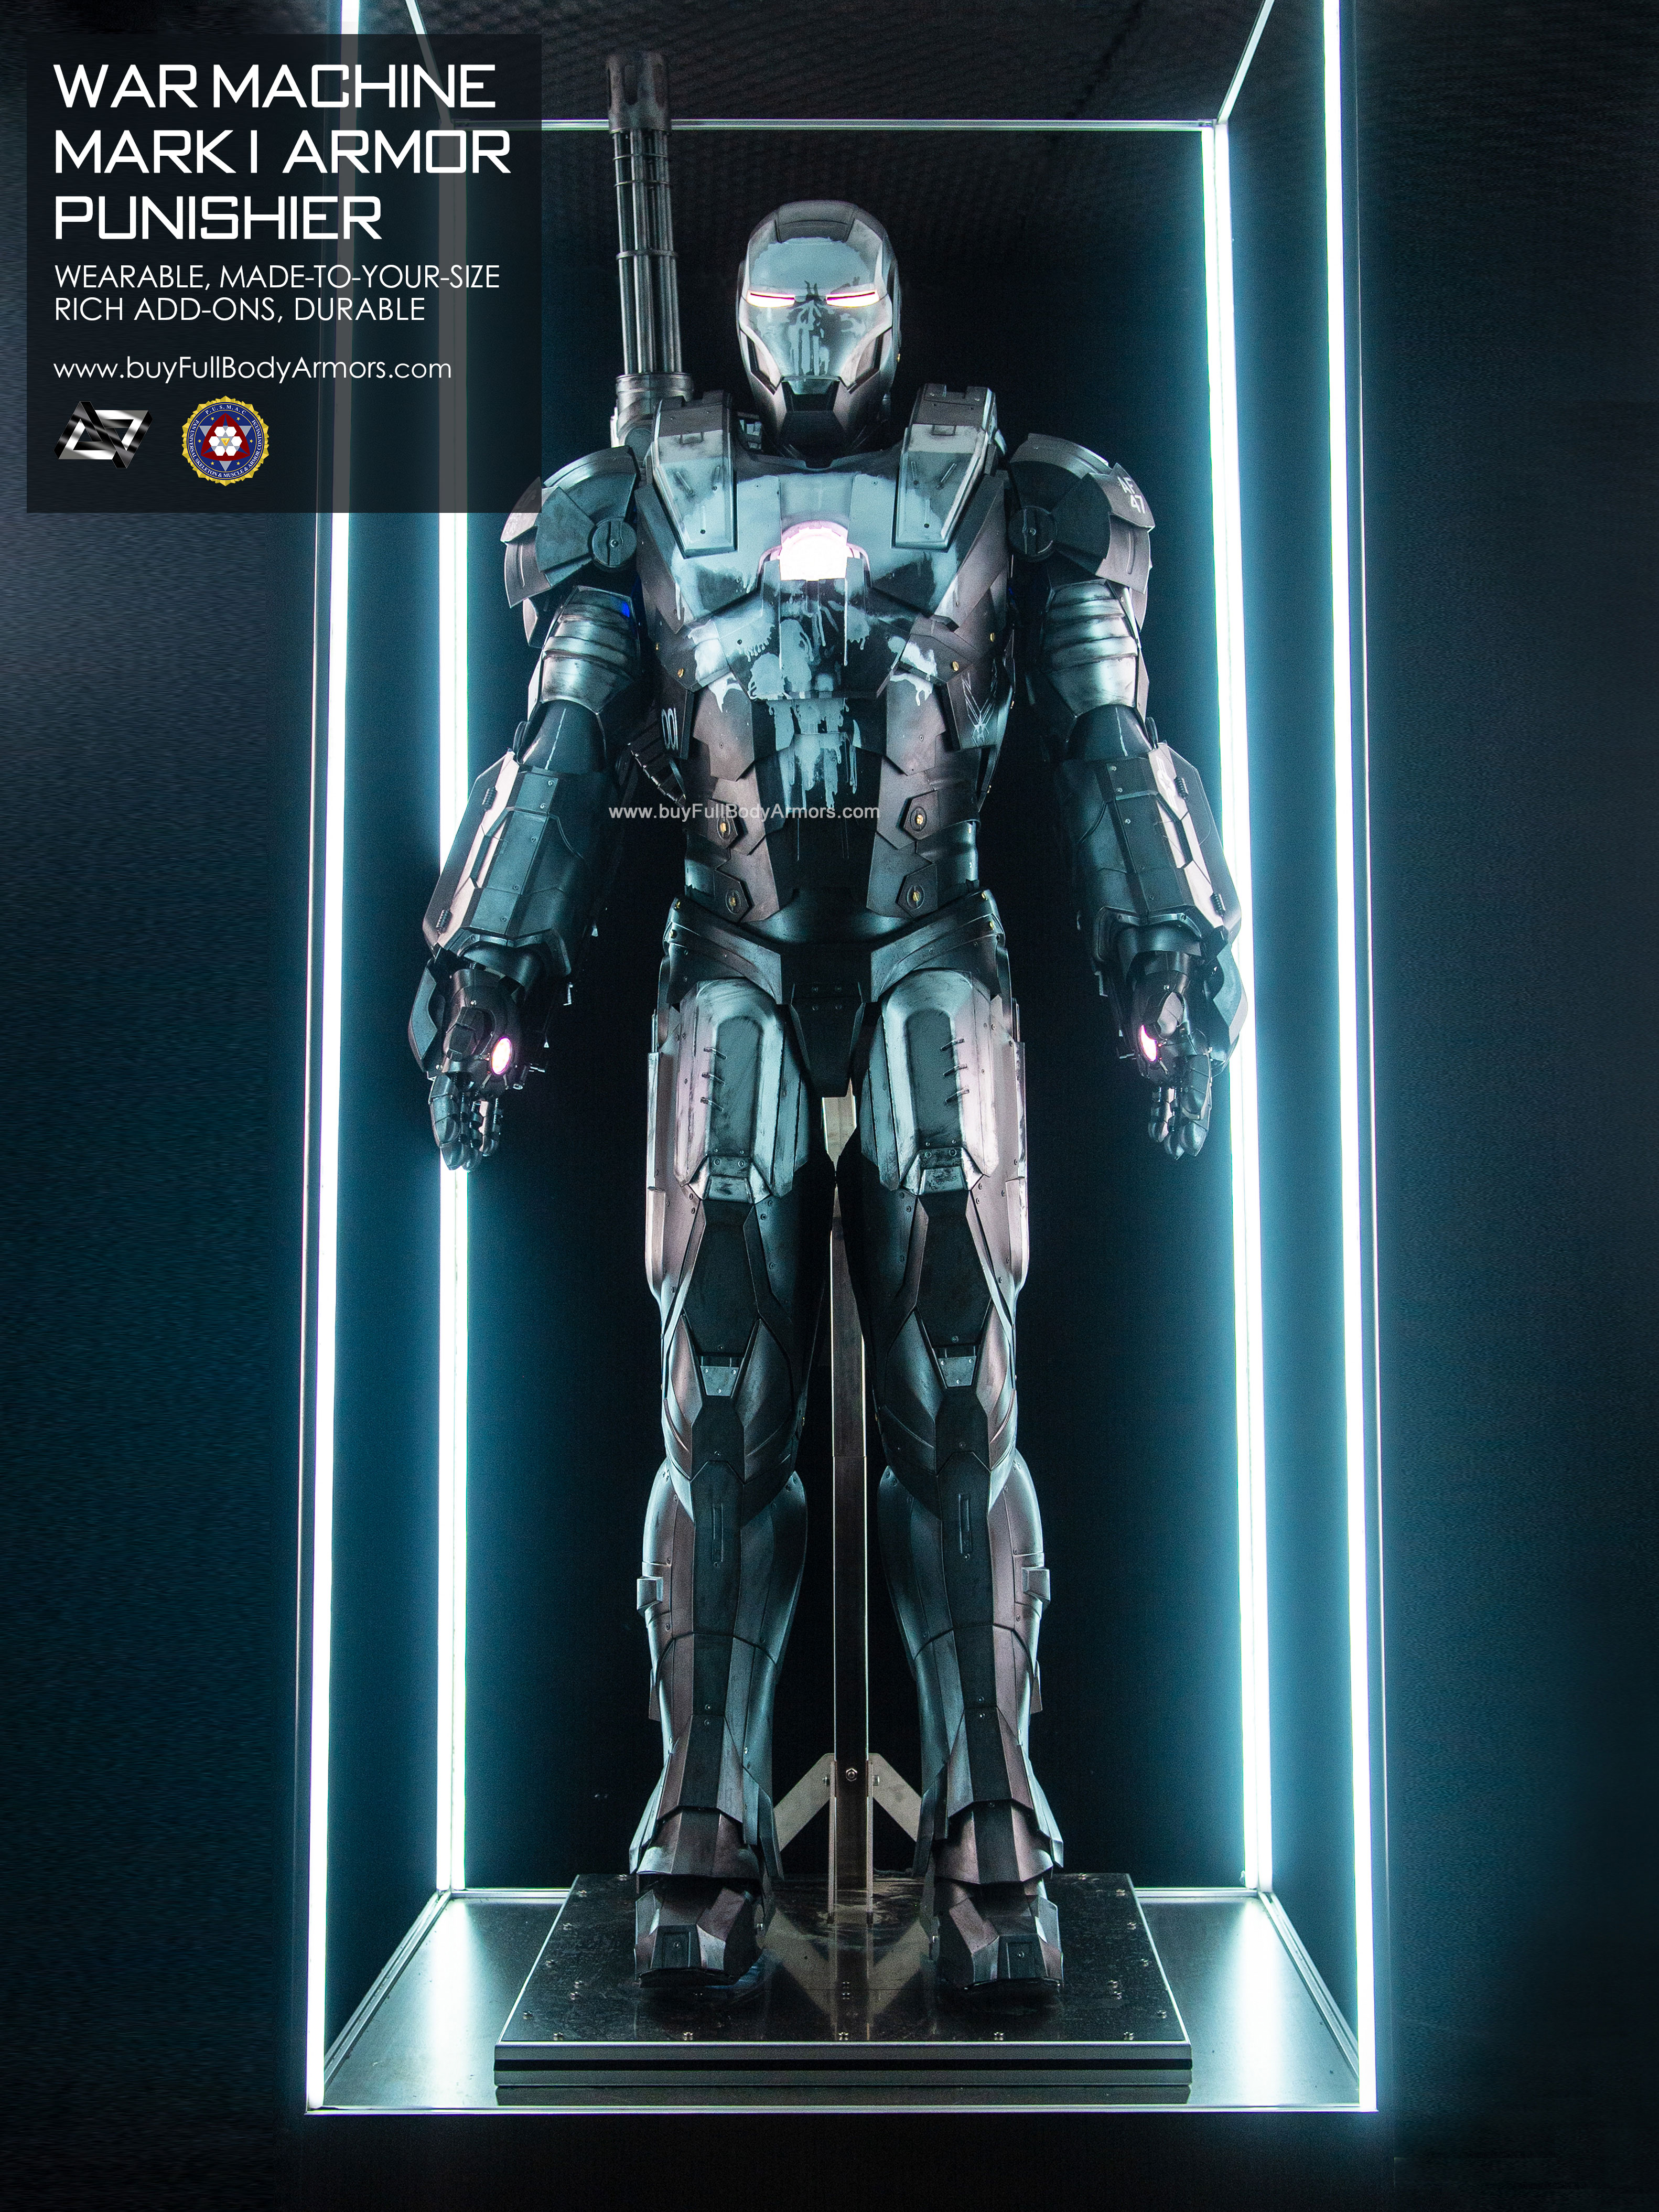 Wearable iron man suit War Machine Mark I Armor Suit punisher